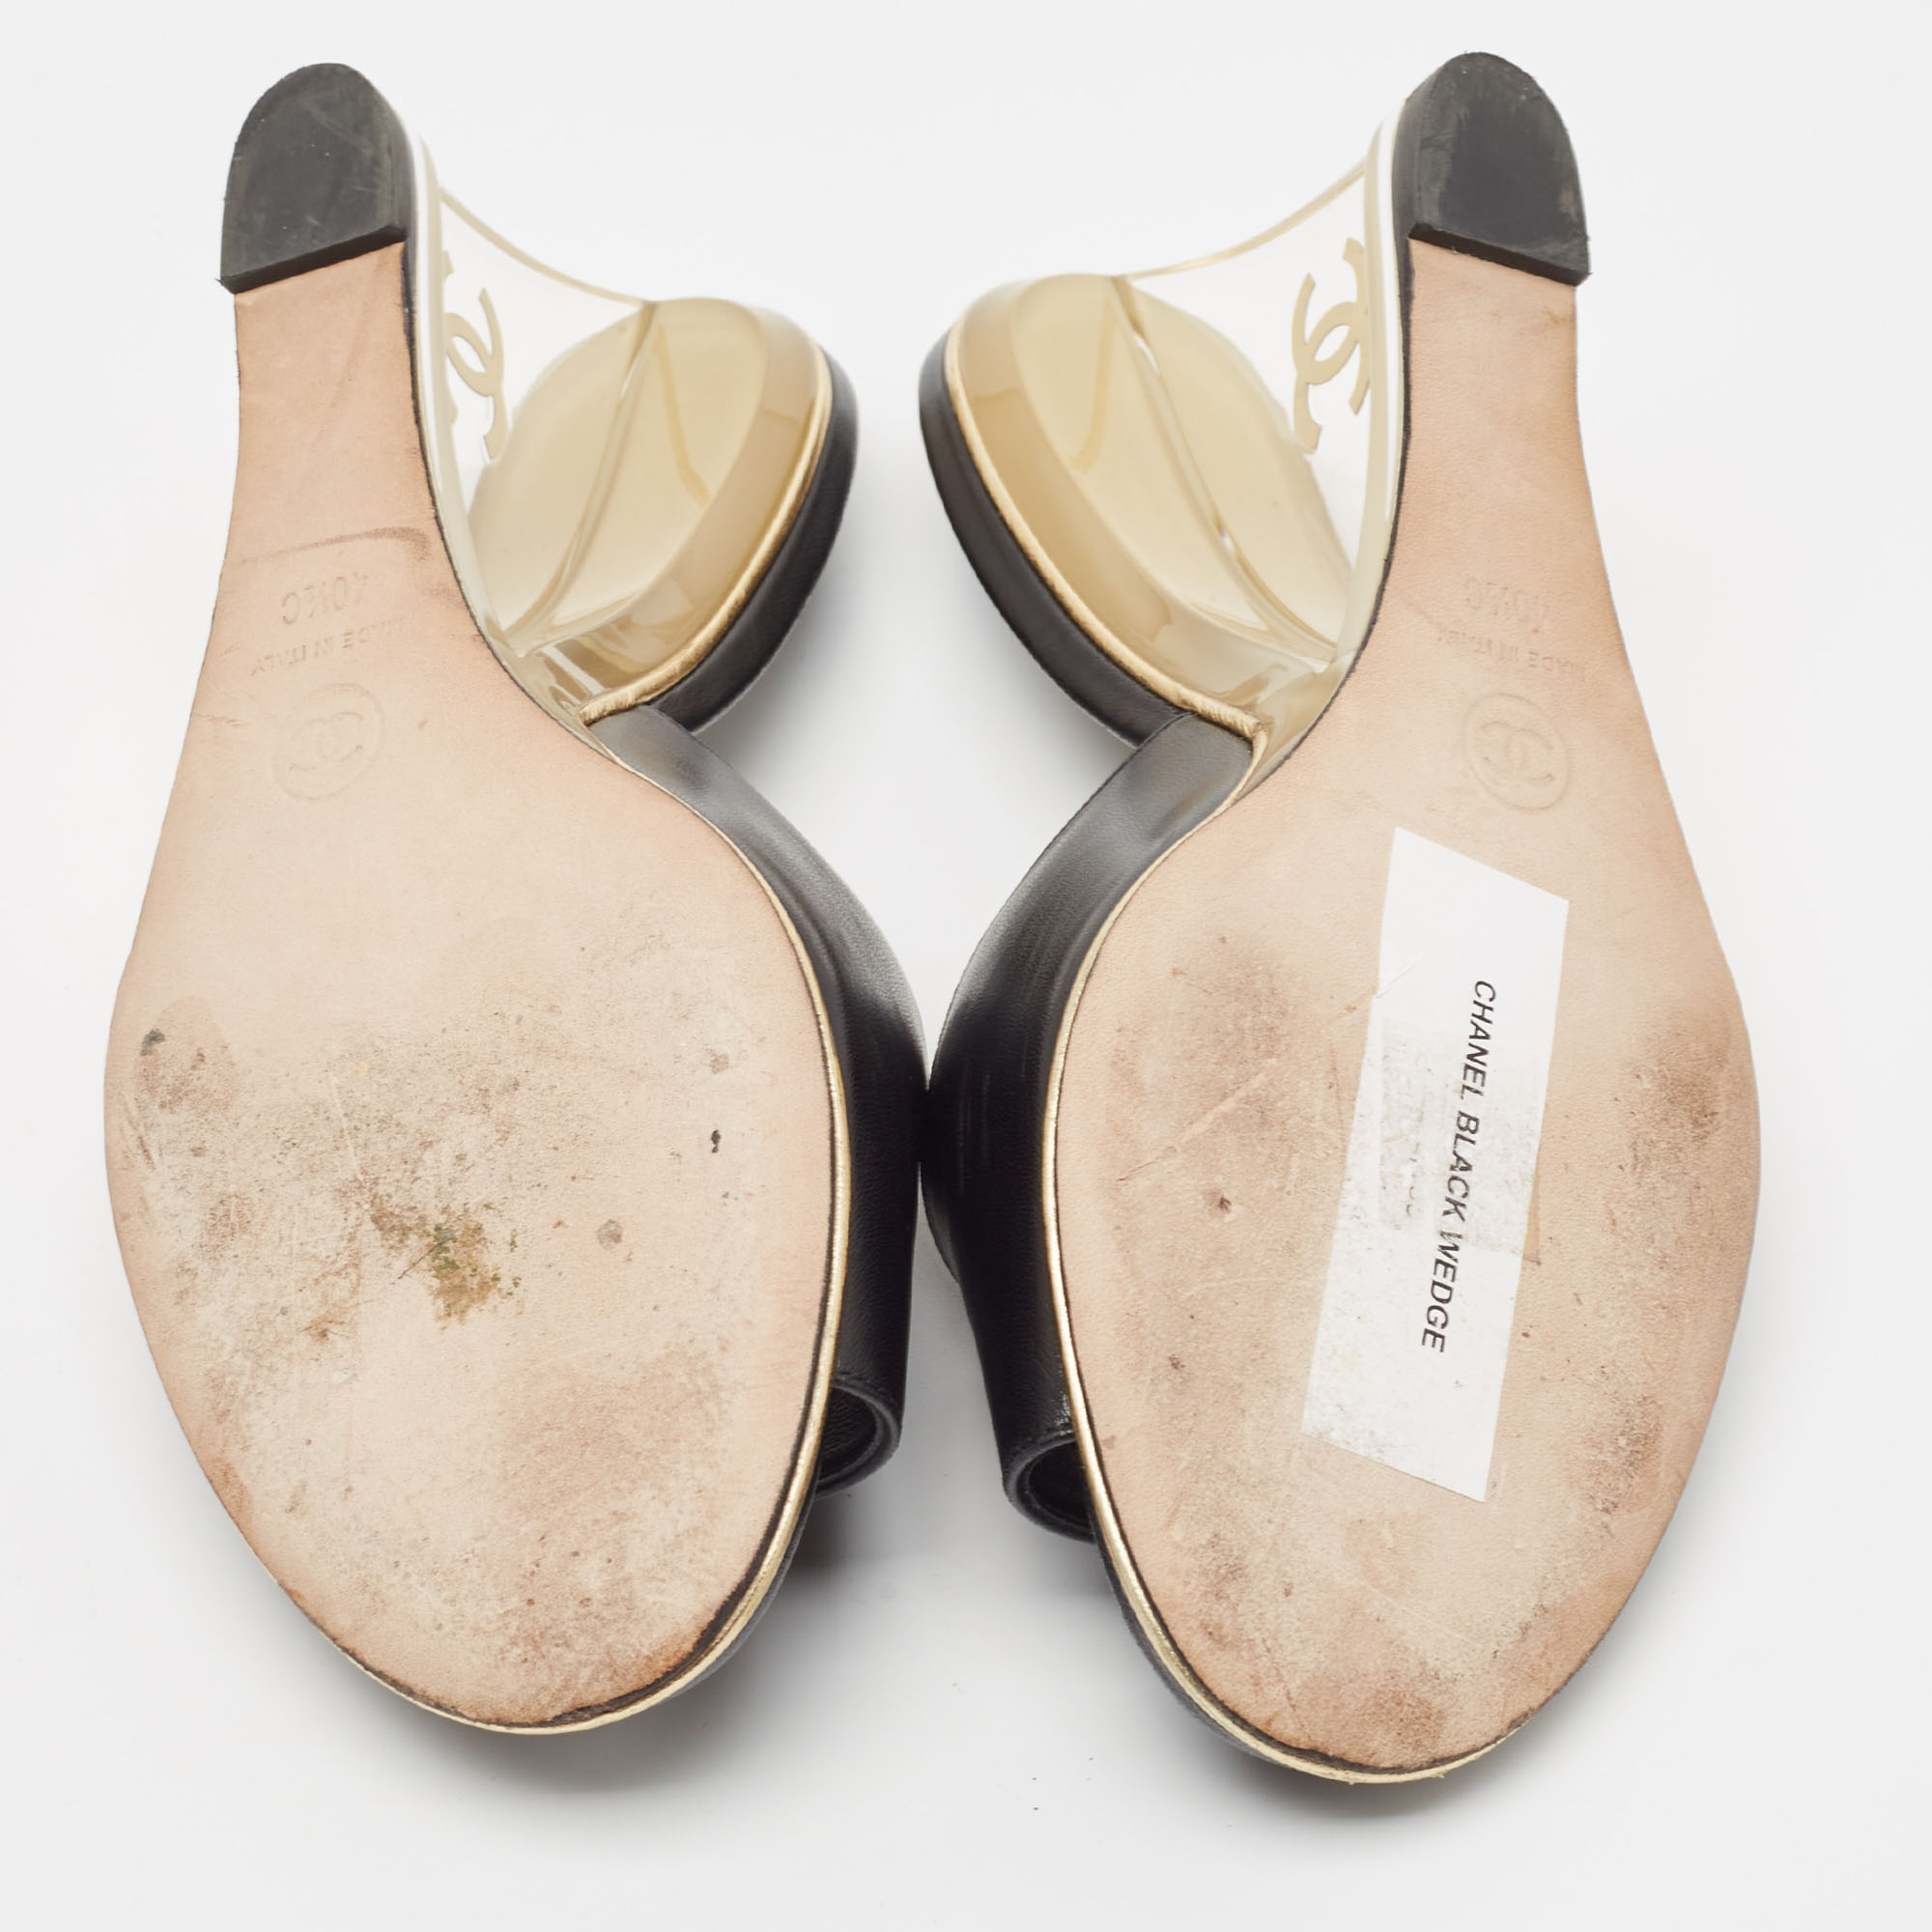 Chanel Black Leather CC Wedge Slide Sandals Size 40.5